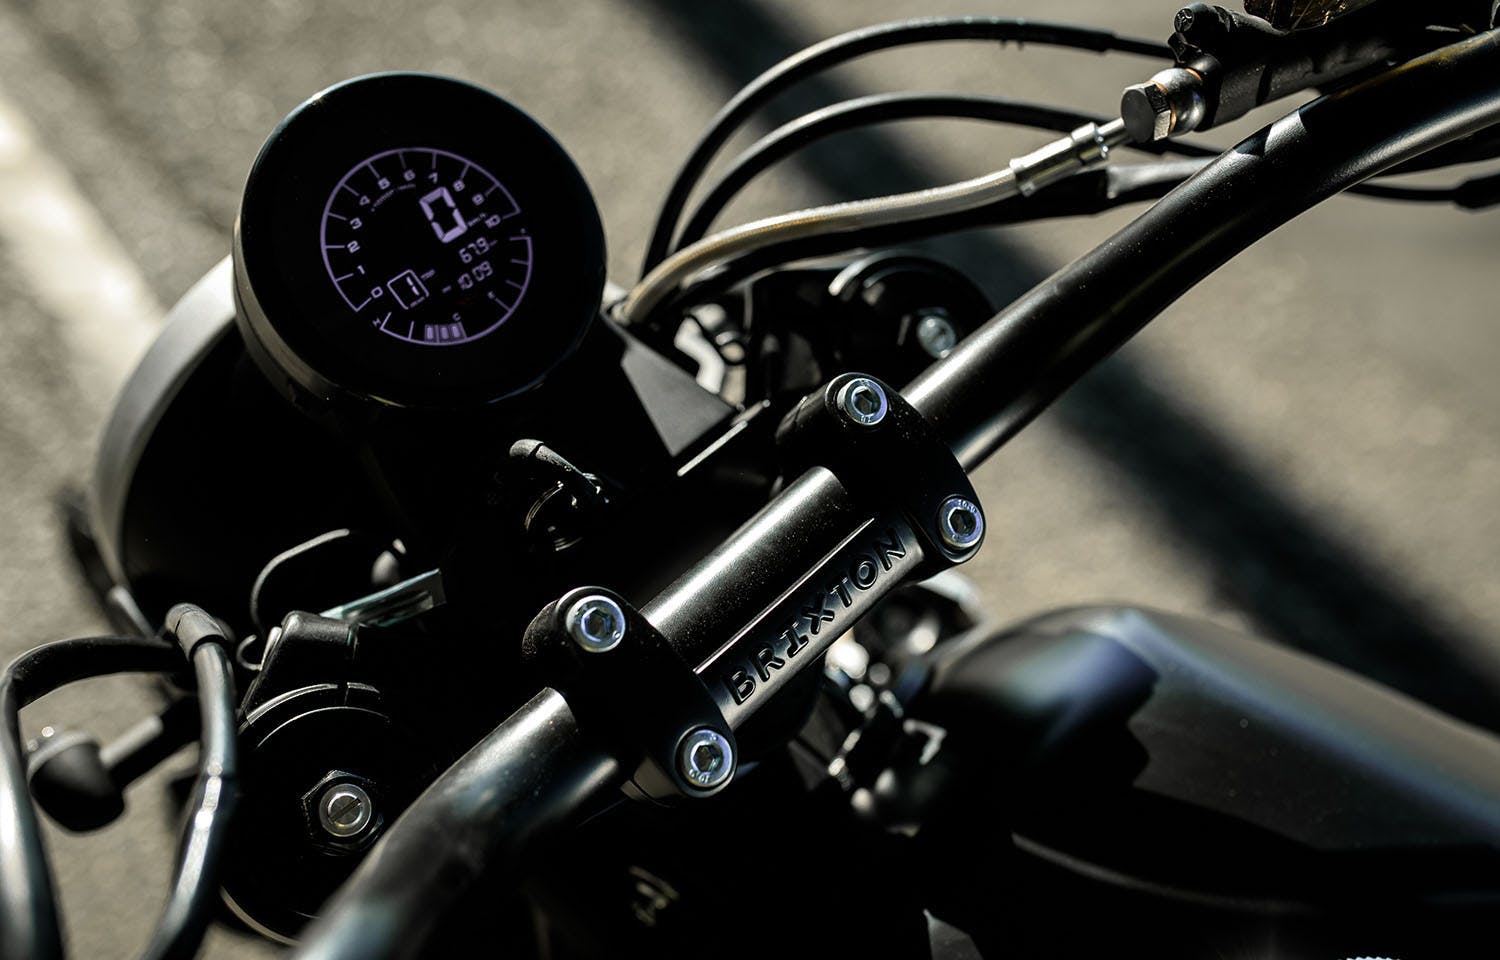 Brixton Motorcycles - Crossfire 500 X